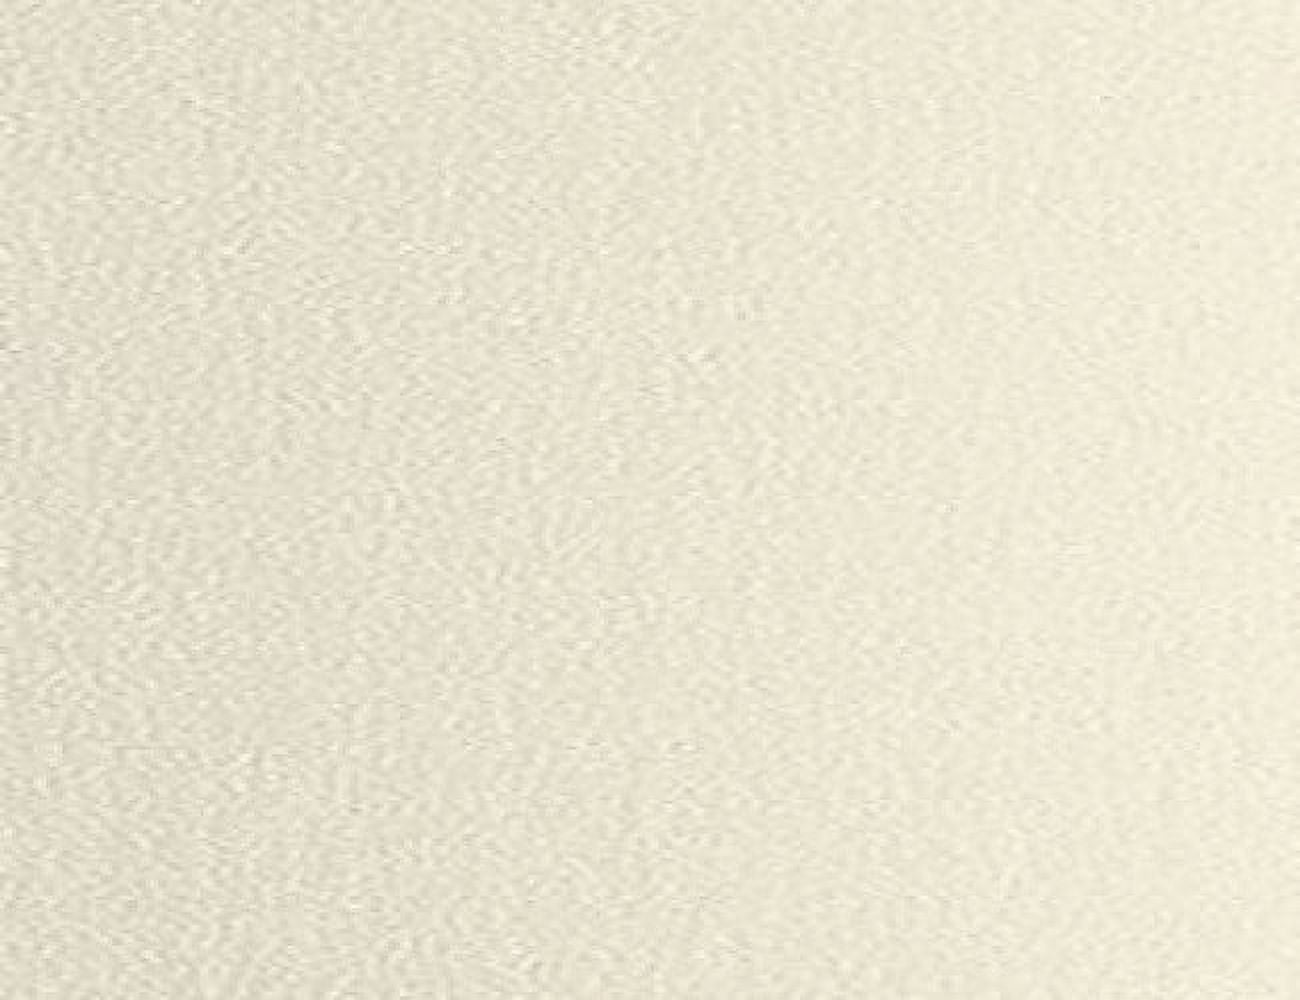 Stardream Metallic - 8.5X11 Card Stock Paper - ANTIQUE GOLD